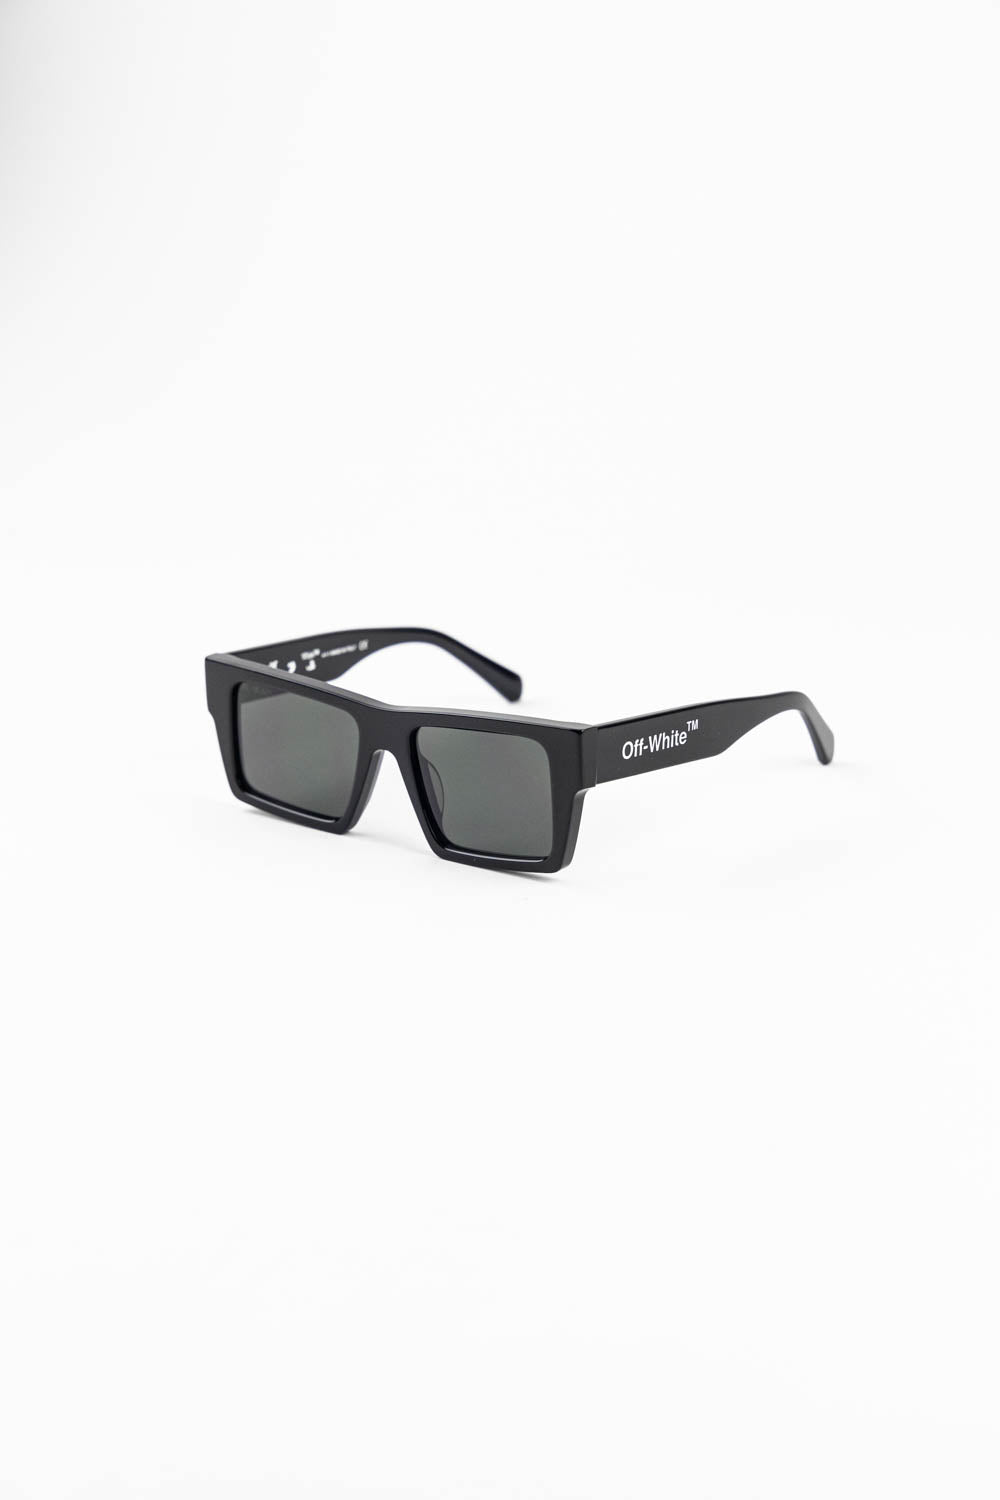 Off-White Nassau Transparent 8507 Sunglasses